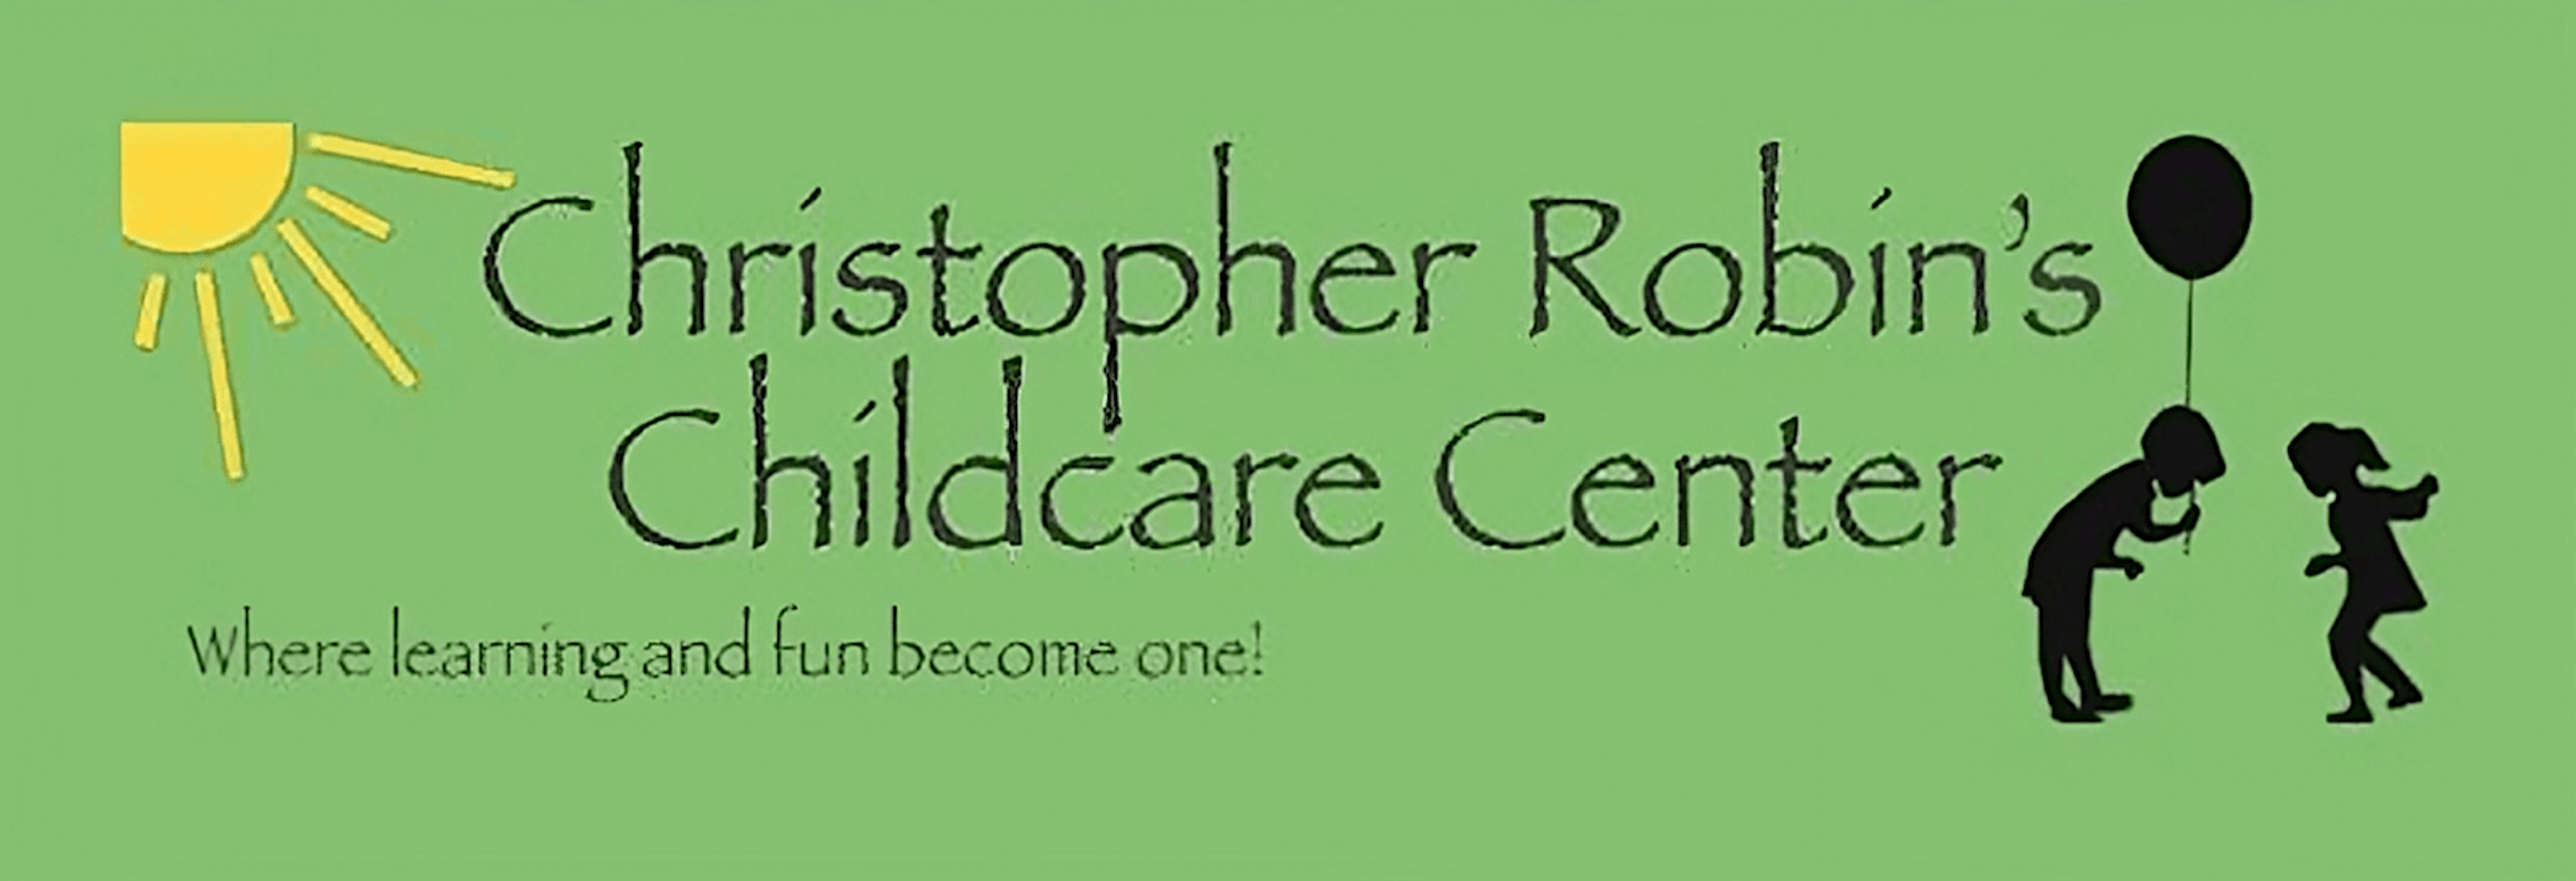 Christopher Robin's Childcare Centre logo on a transparent background